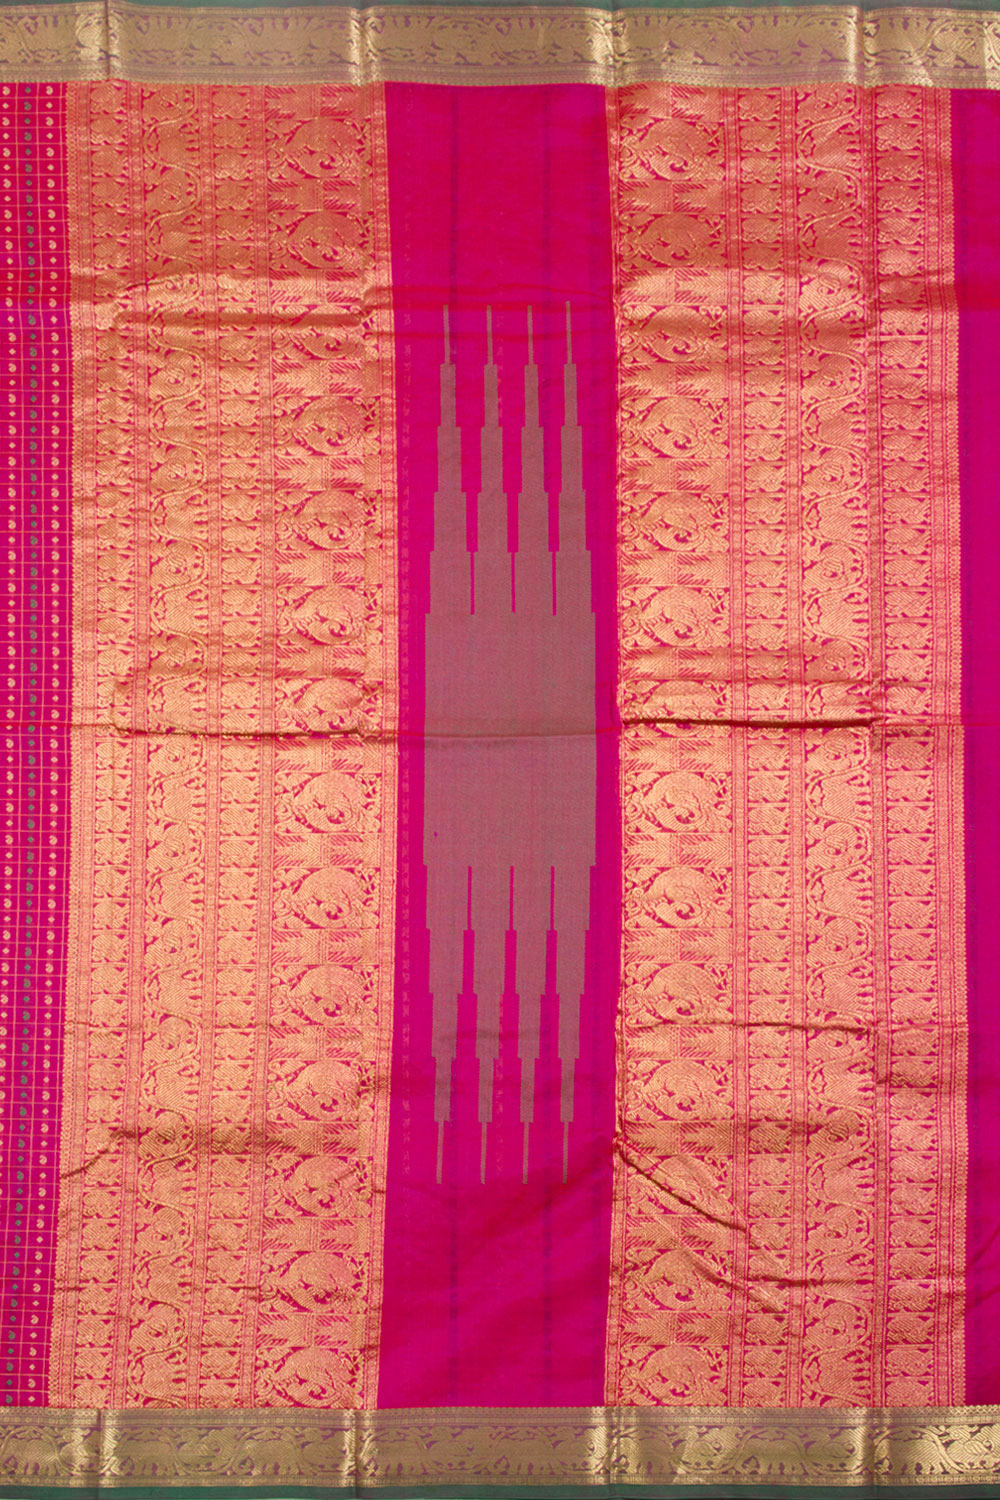 Magenta Handloom Kanchi Silk Cotton Saree 10061318